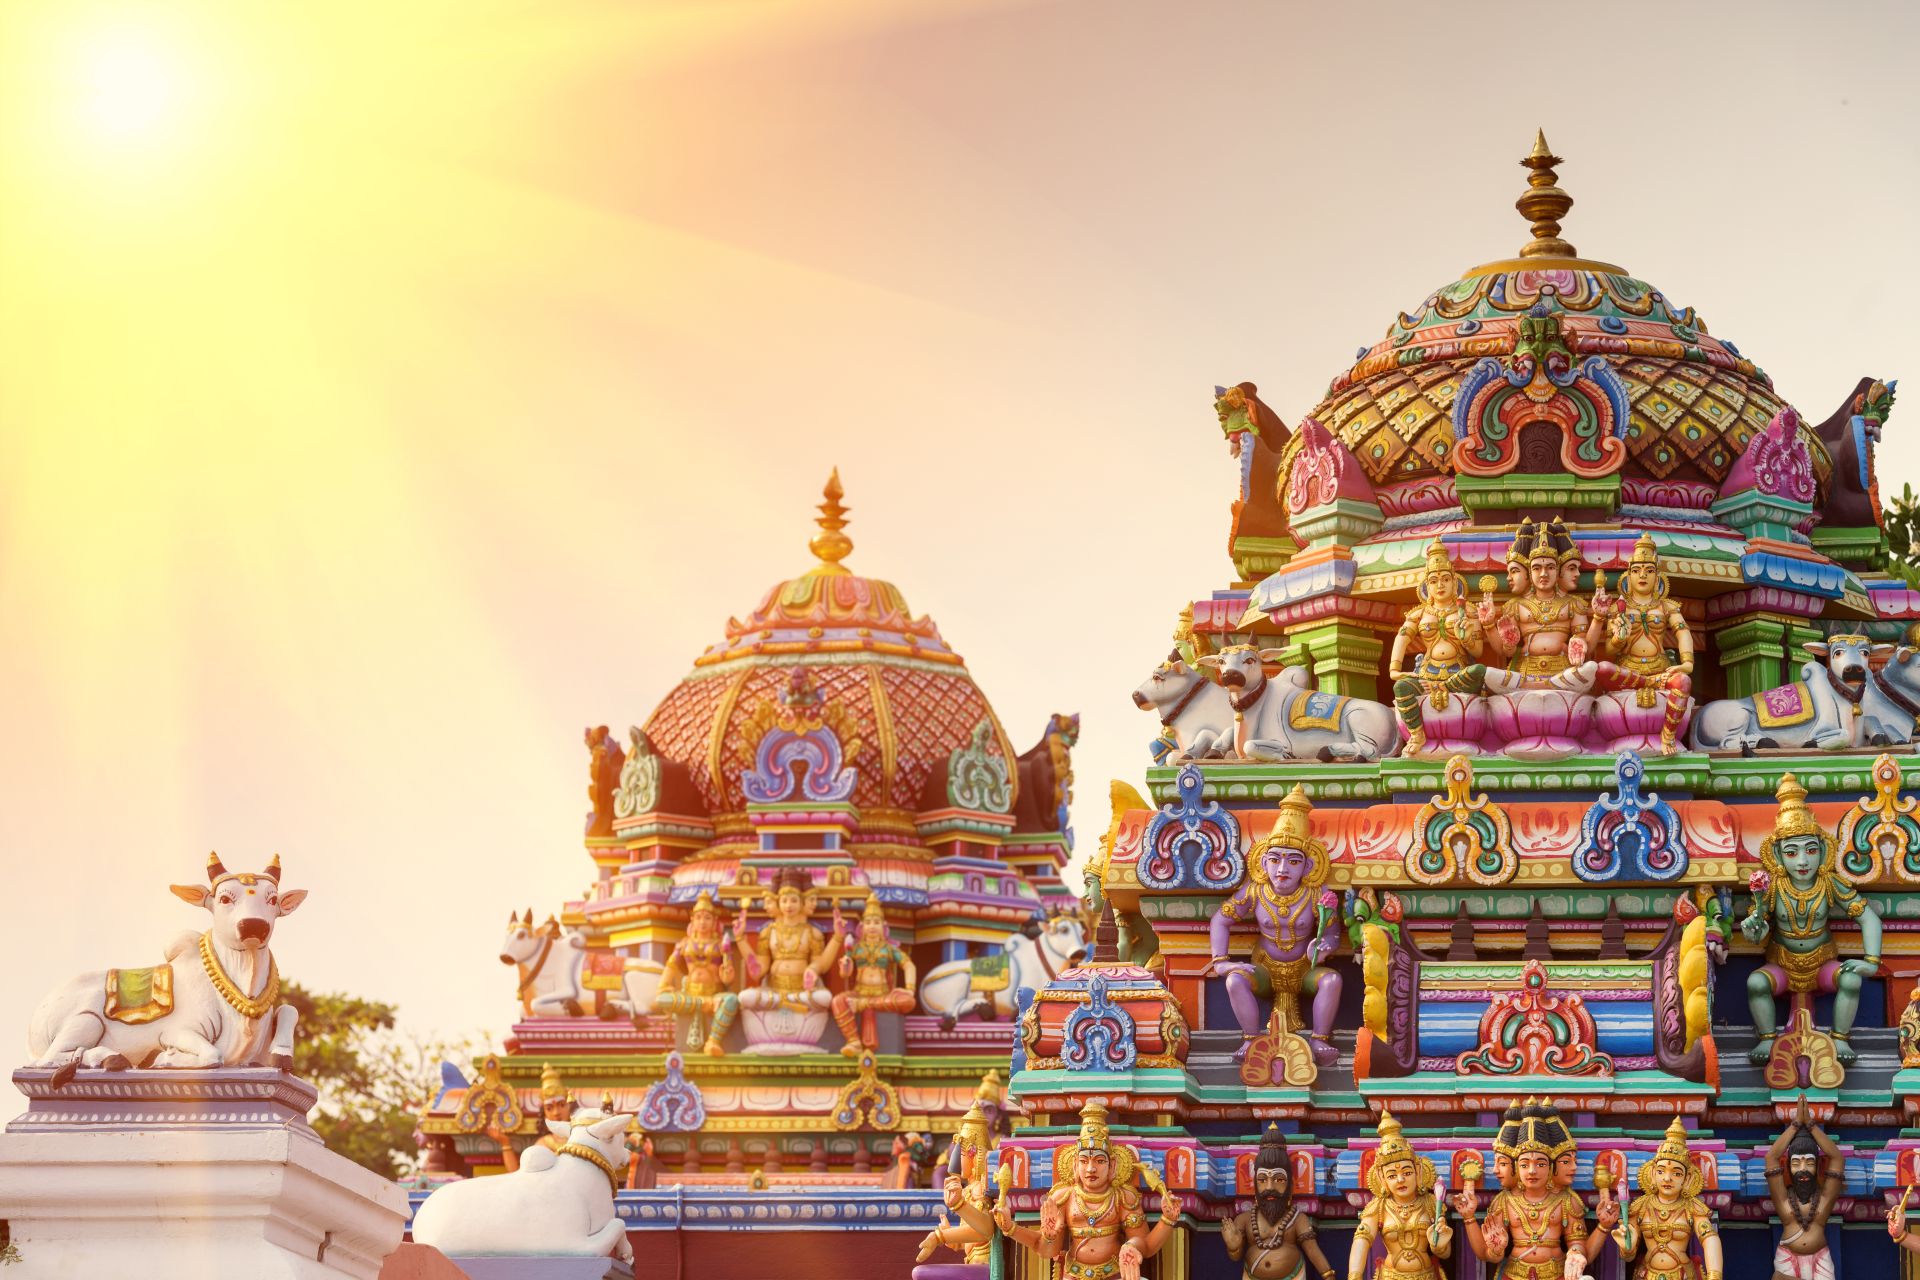 красочная гопура в индуистском храме Капалешварар